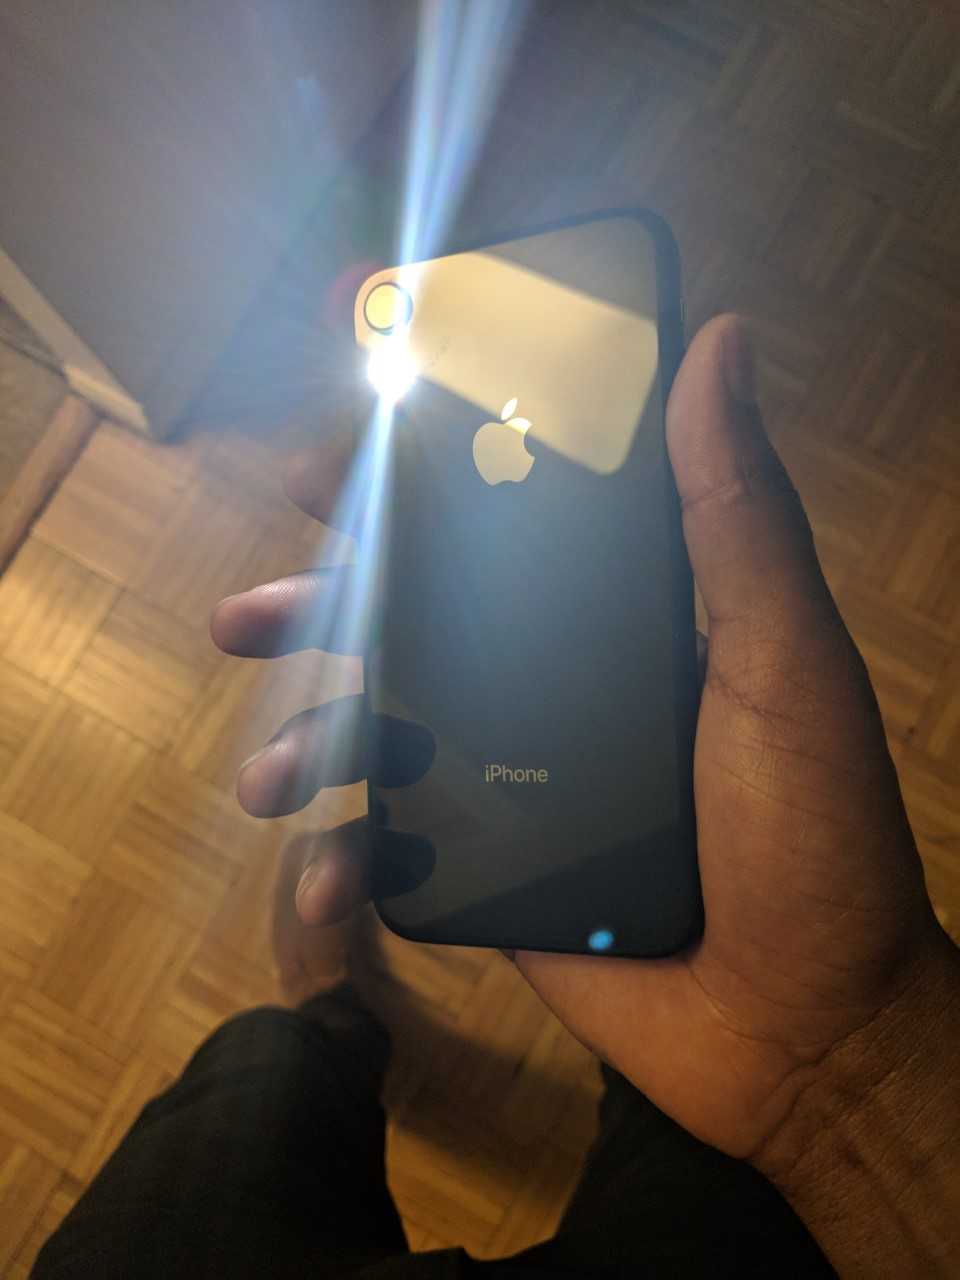 iphone torch light